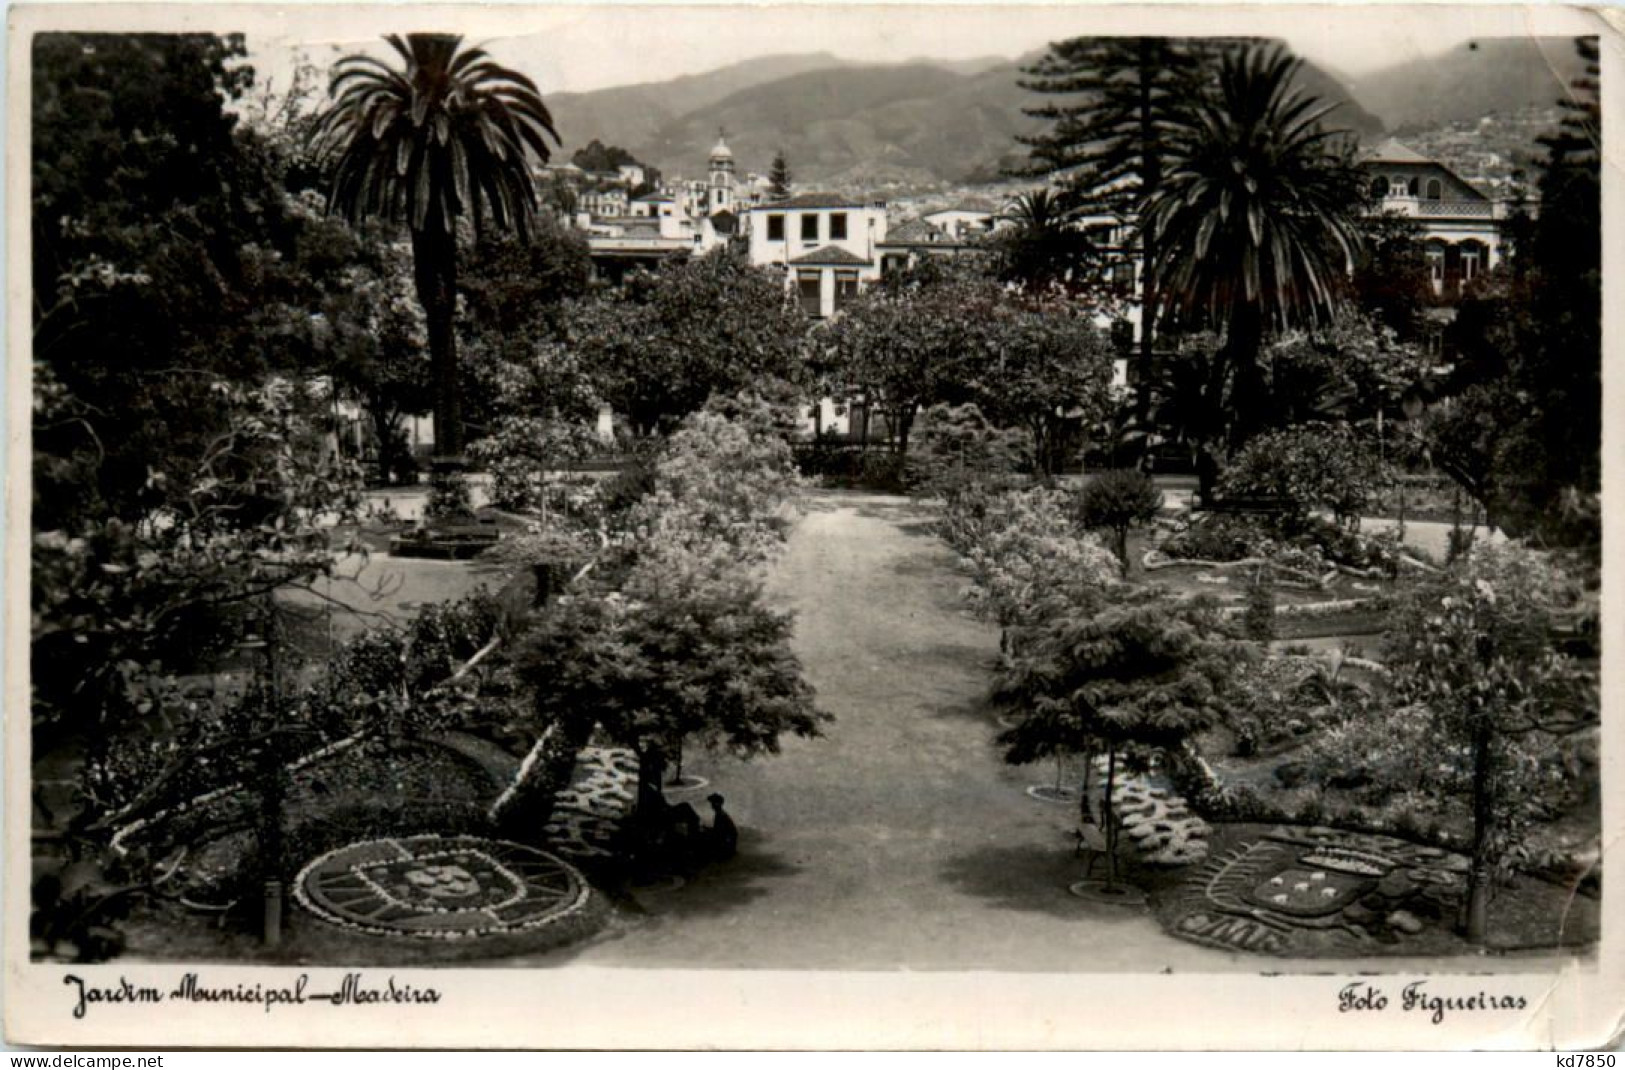 Madeira - Jardim Municipal - Madeira